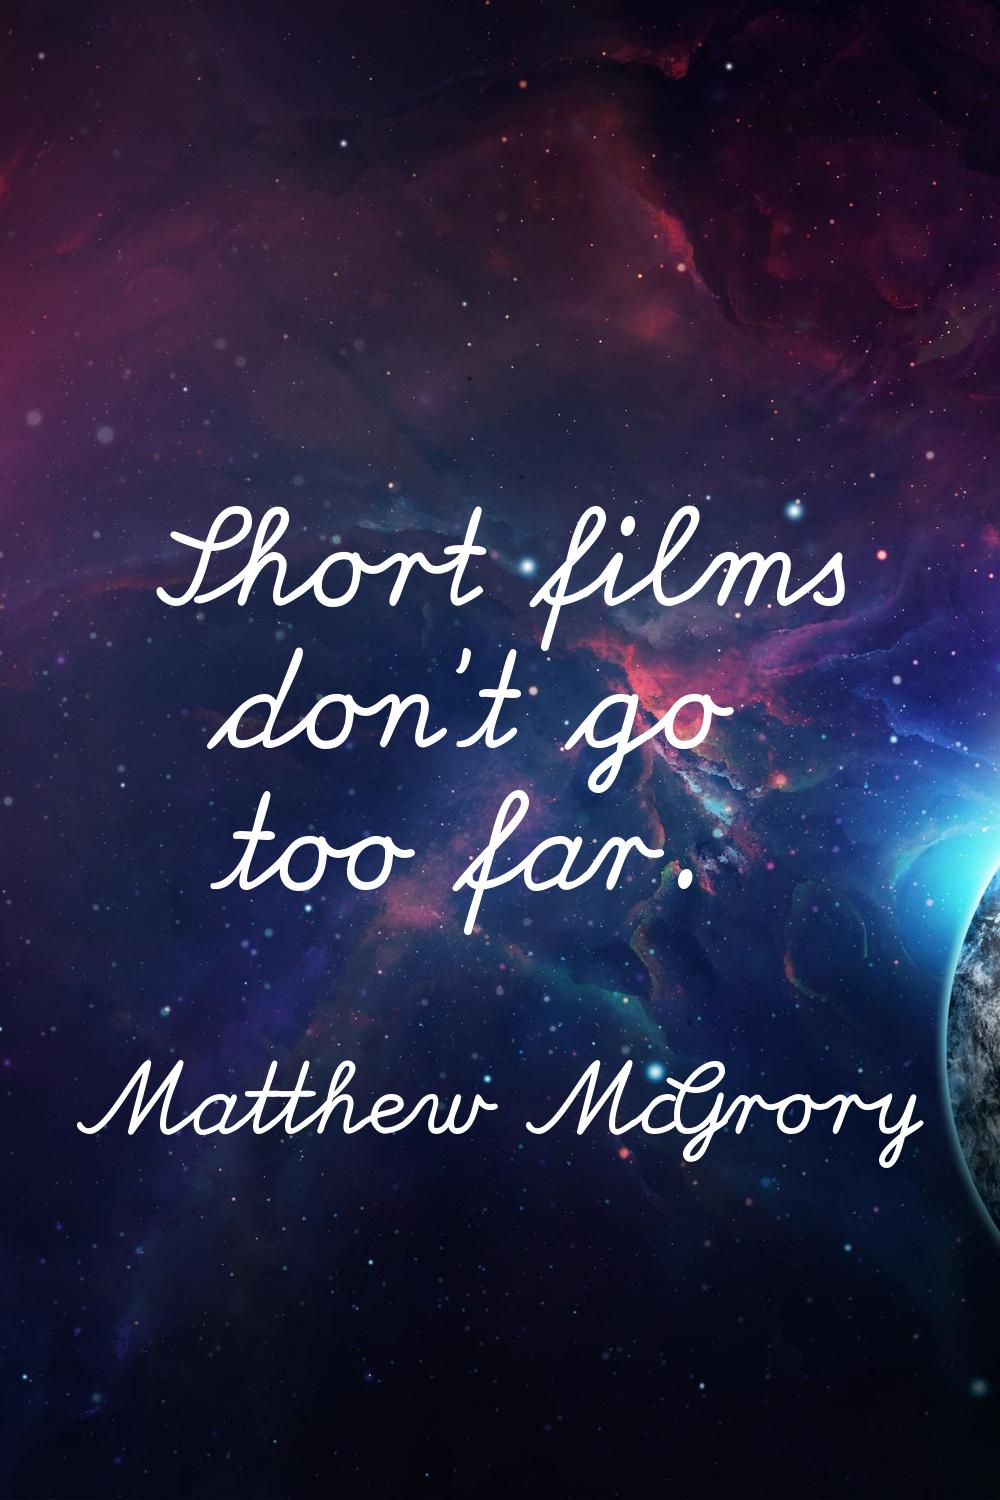 Short films don't go too far.